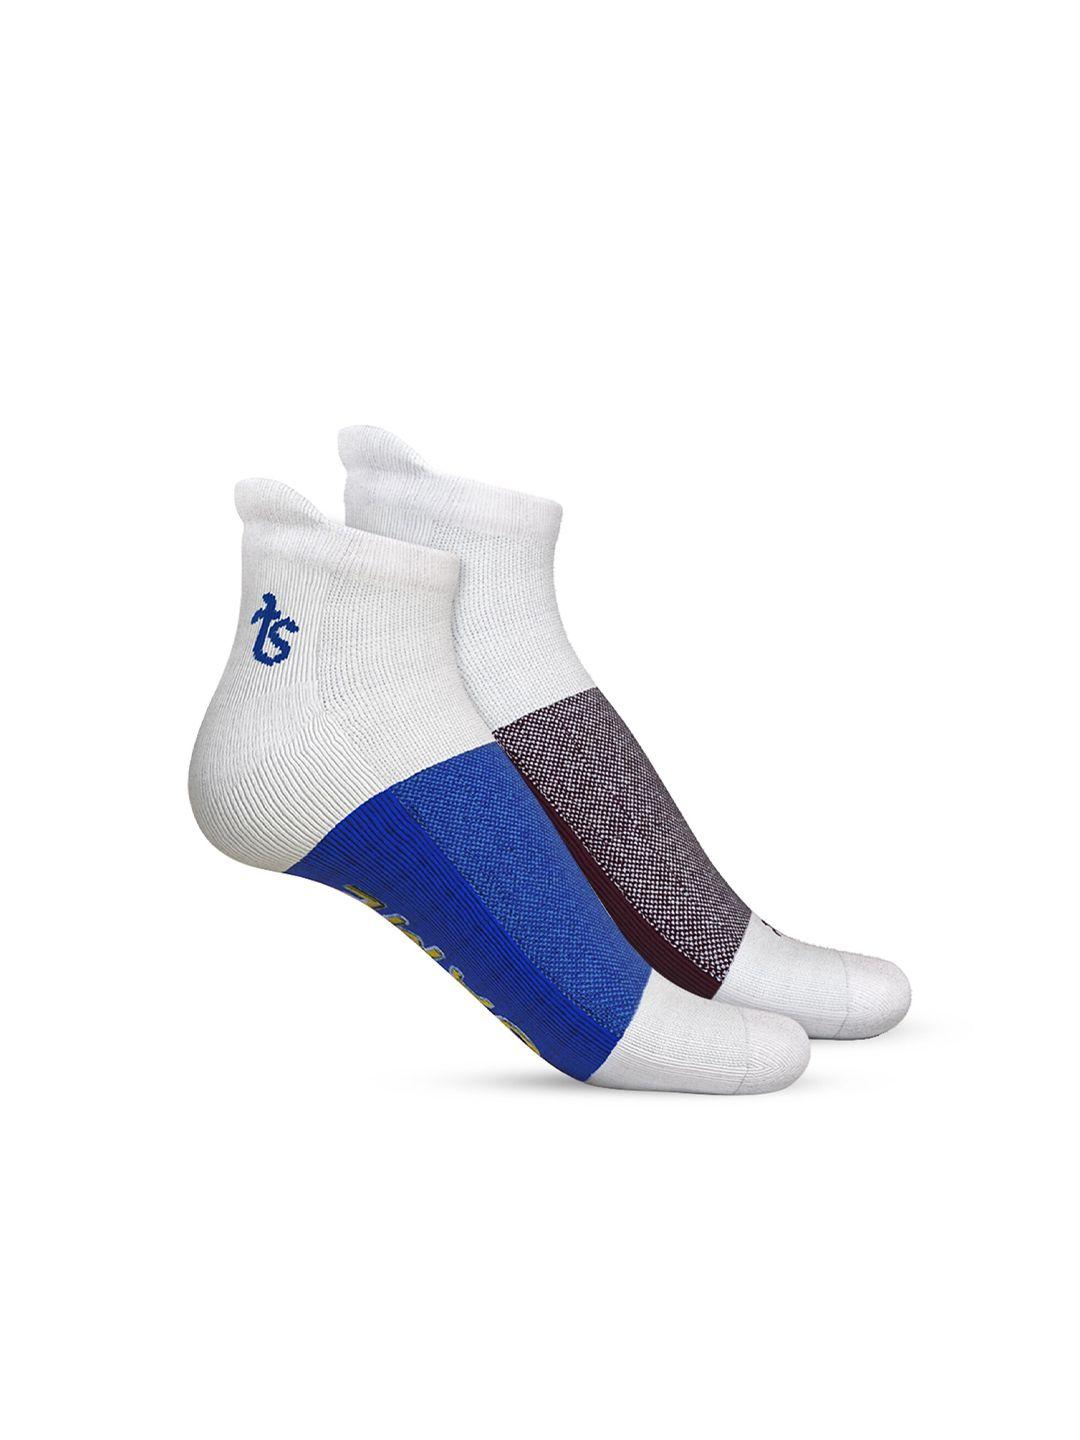 talkingsox unisex pack of 2 patterned ankle-length socks